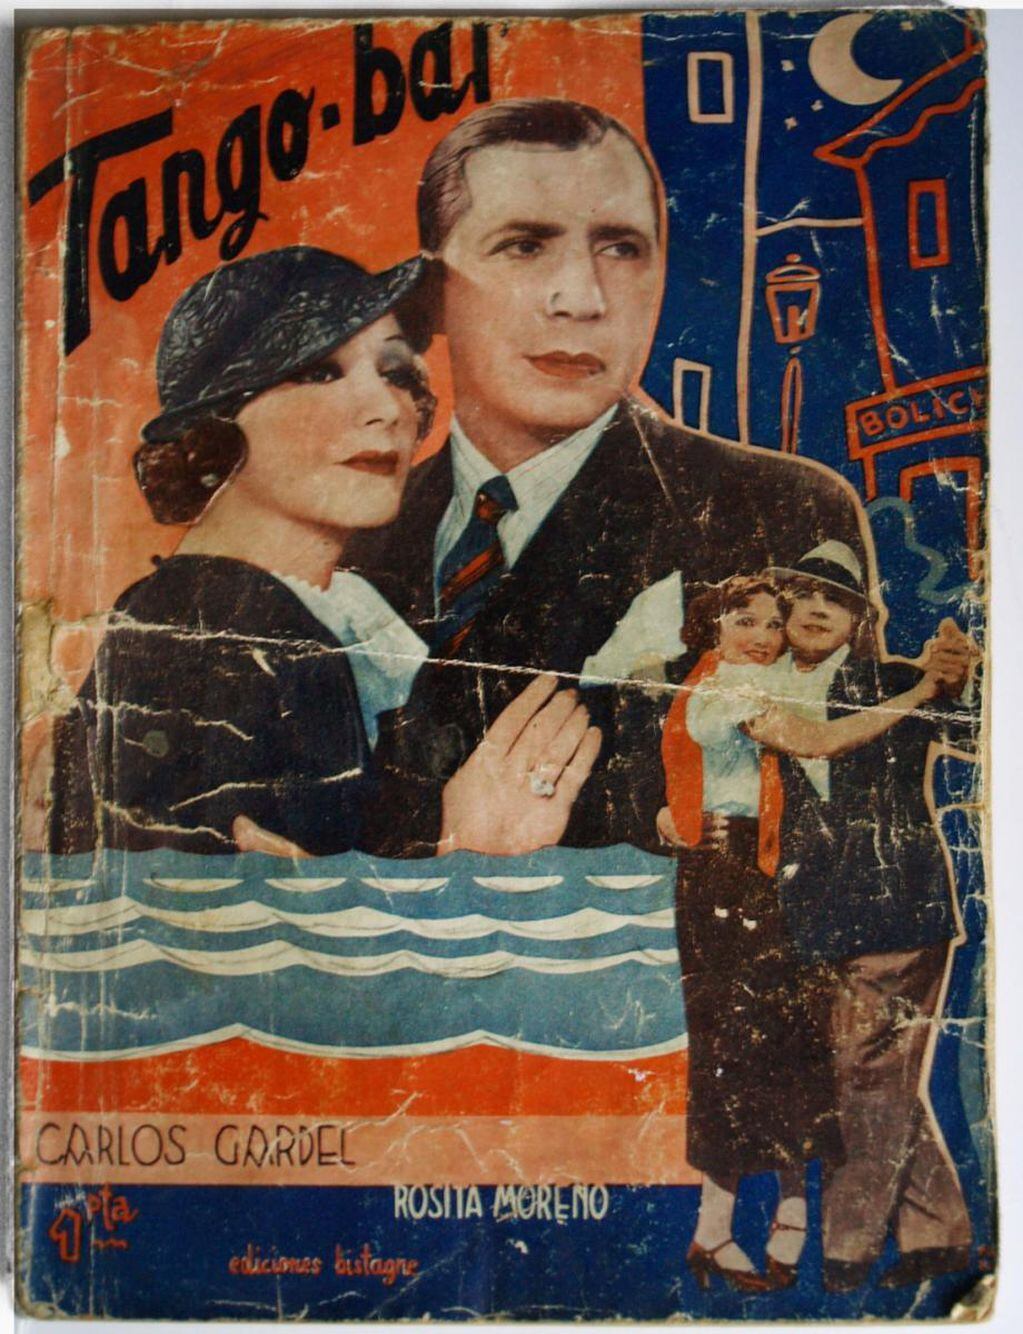 Tango-Bar (John Reinhardt, 1935)